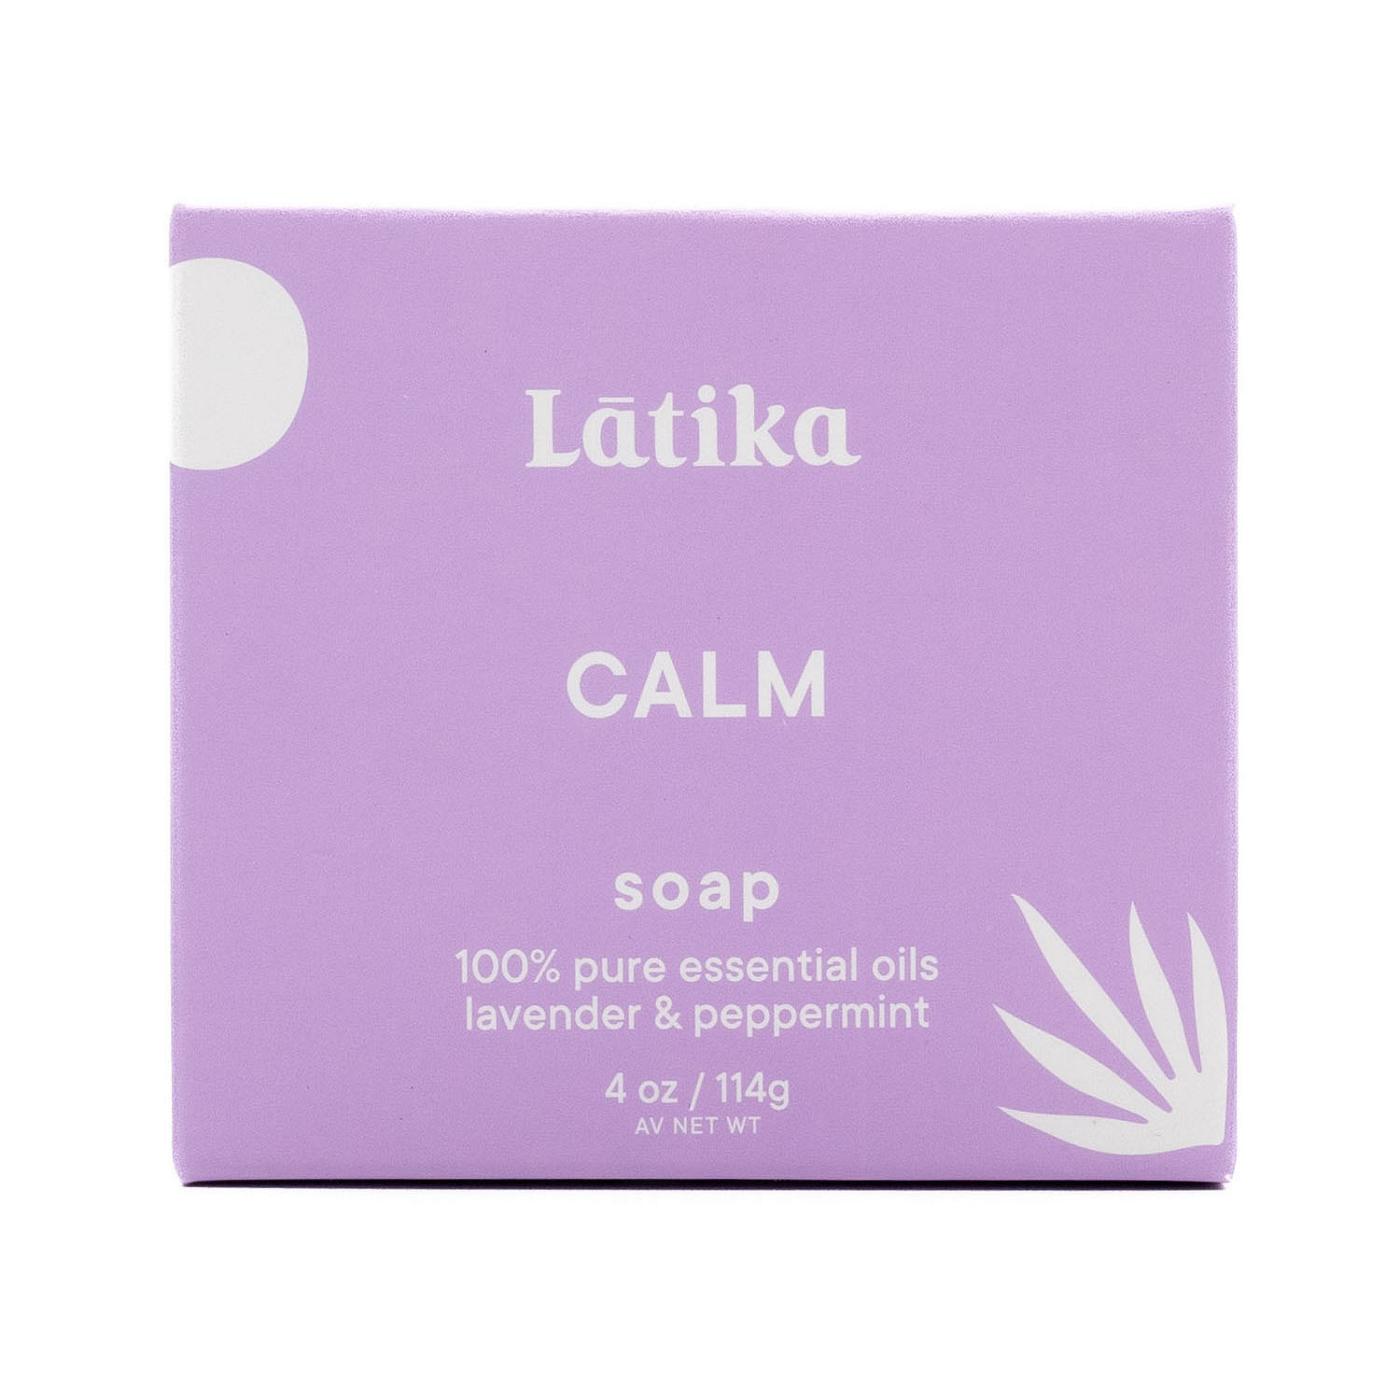 Latika Body Essentials Calm Bar Soap Lavender & Peppermint; image 1 of 3